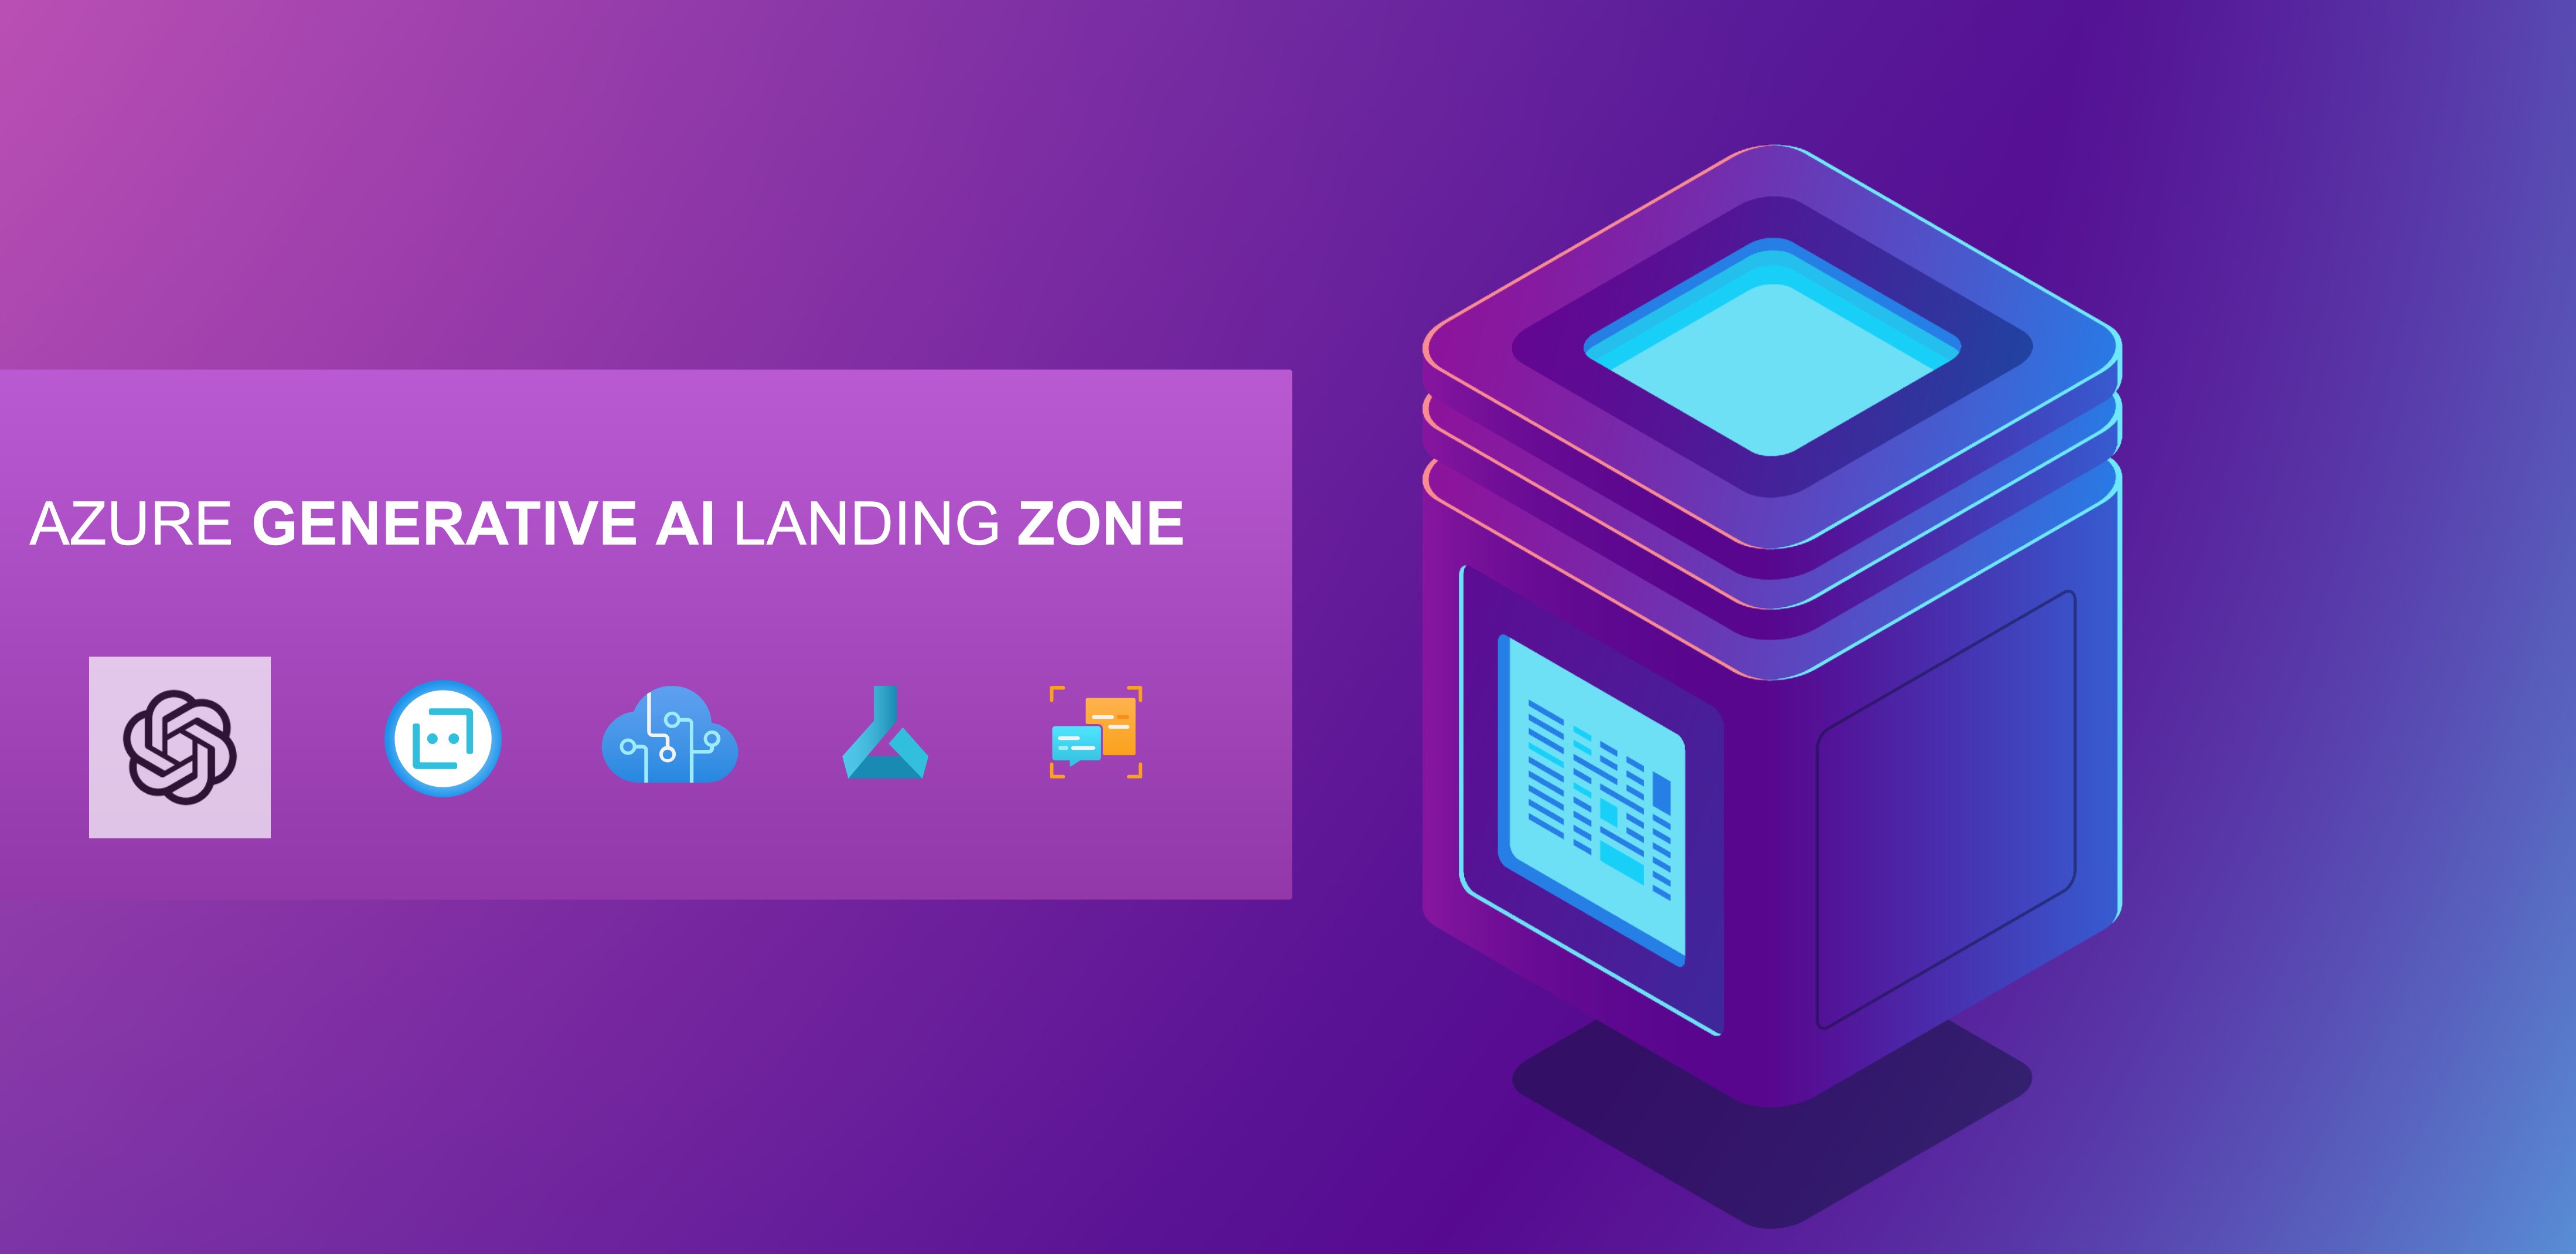 Azure Generative AI Landing Zone